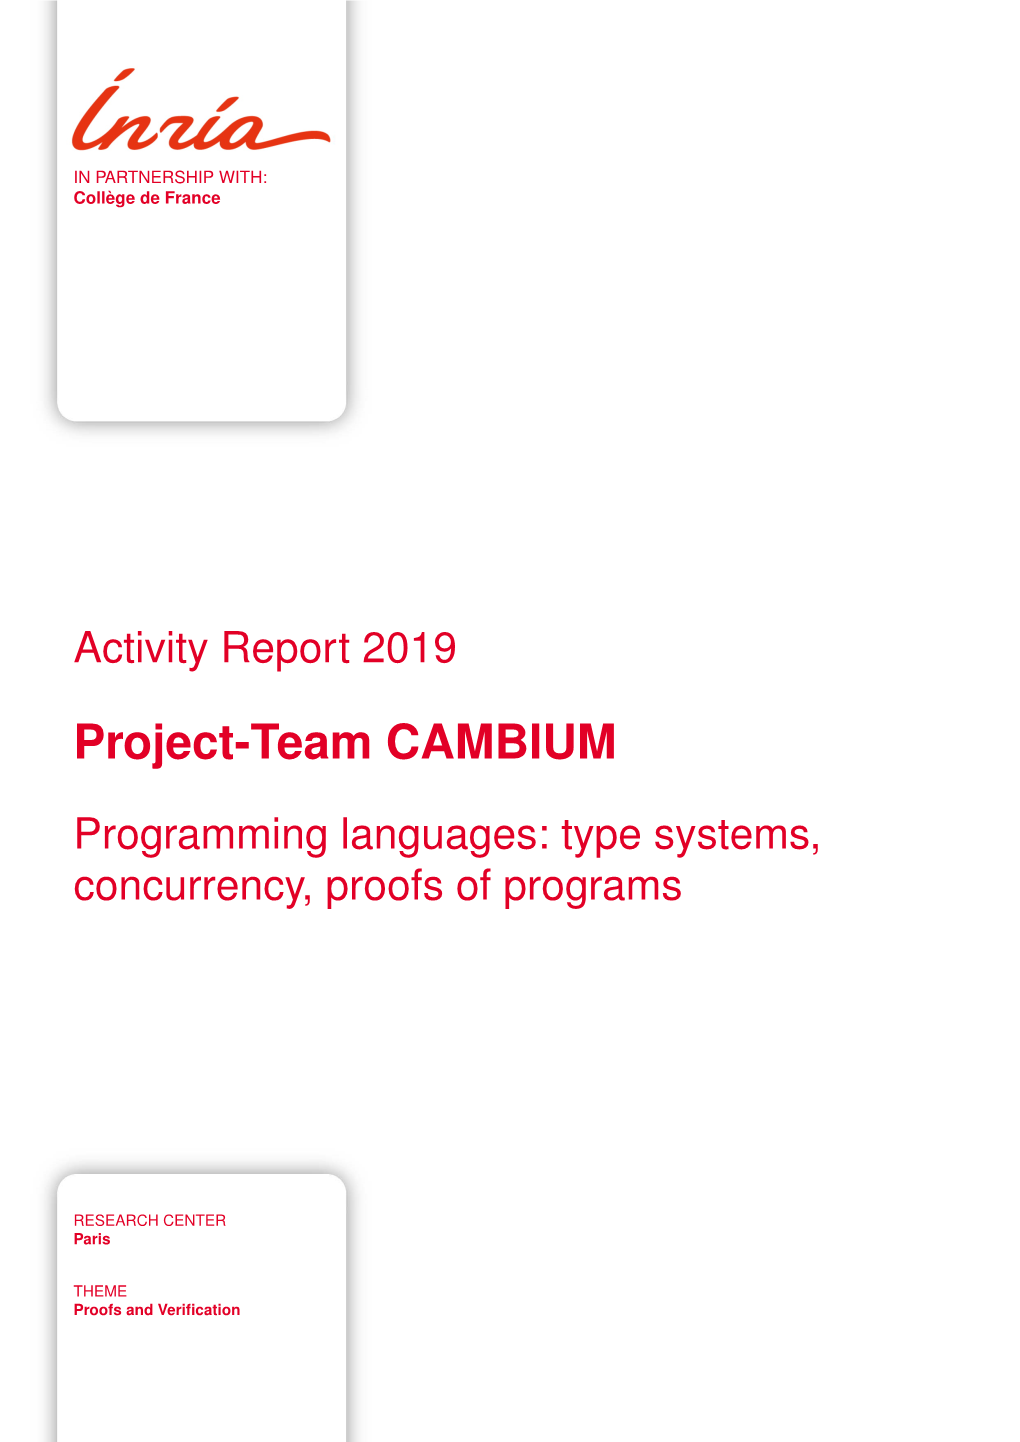 Project-Team CAMBIUM